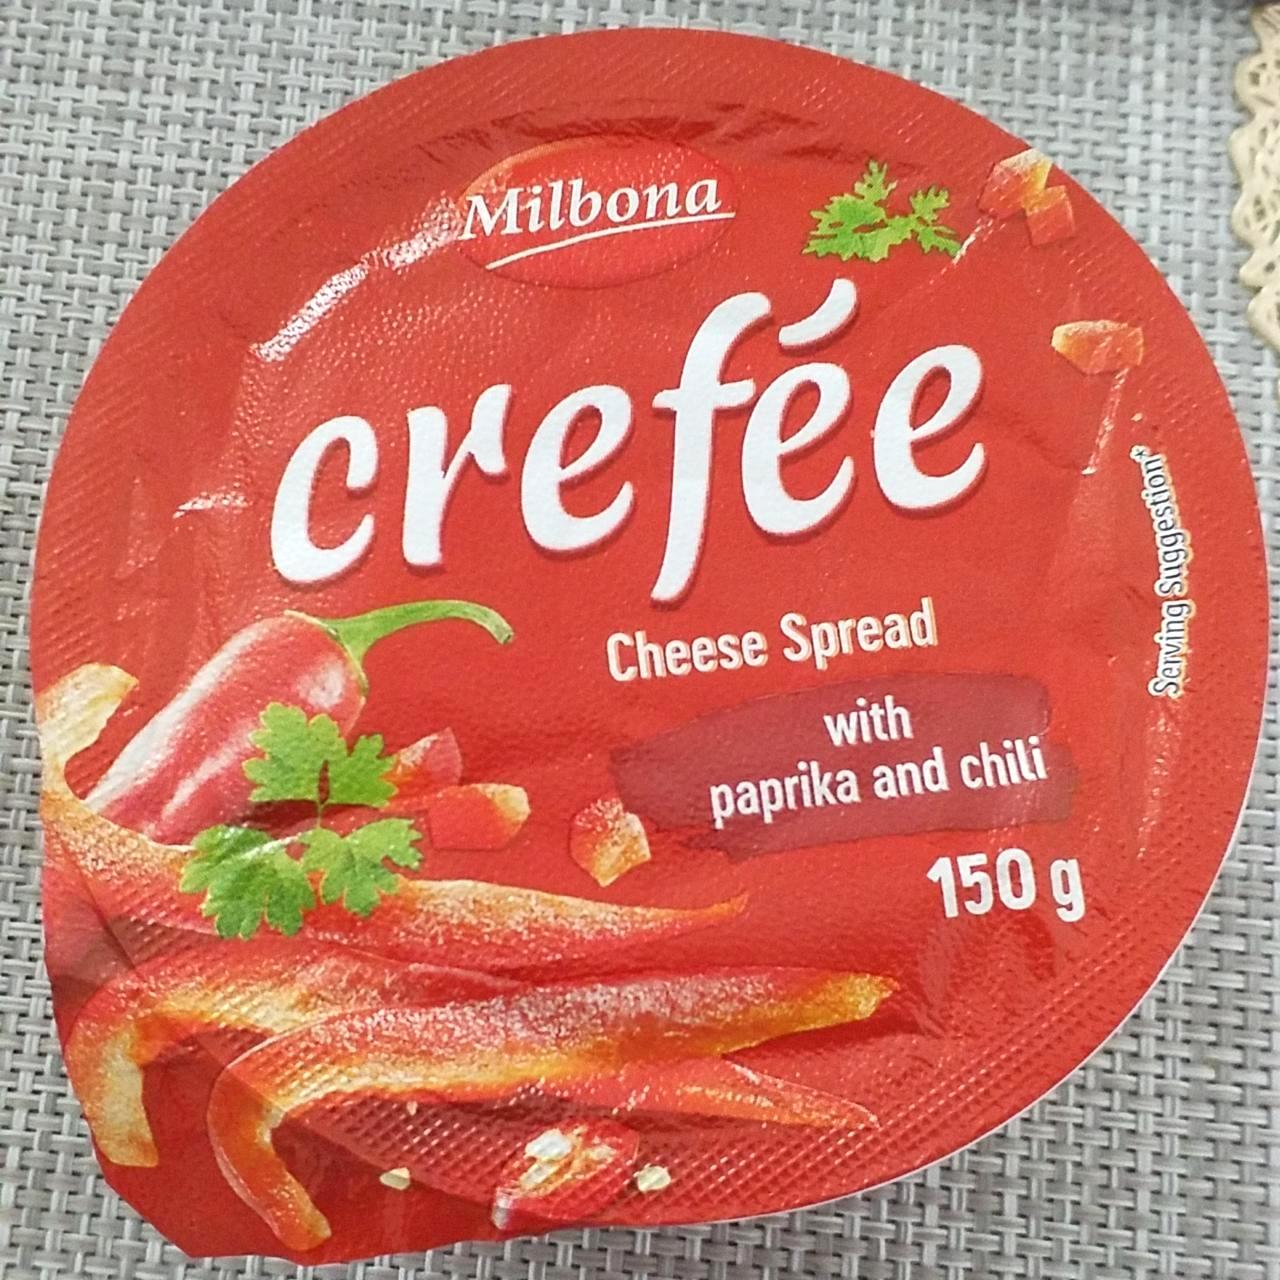 Képek - Crefée cheese spread with paprika and chili Milbona